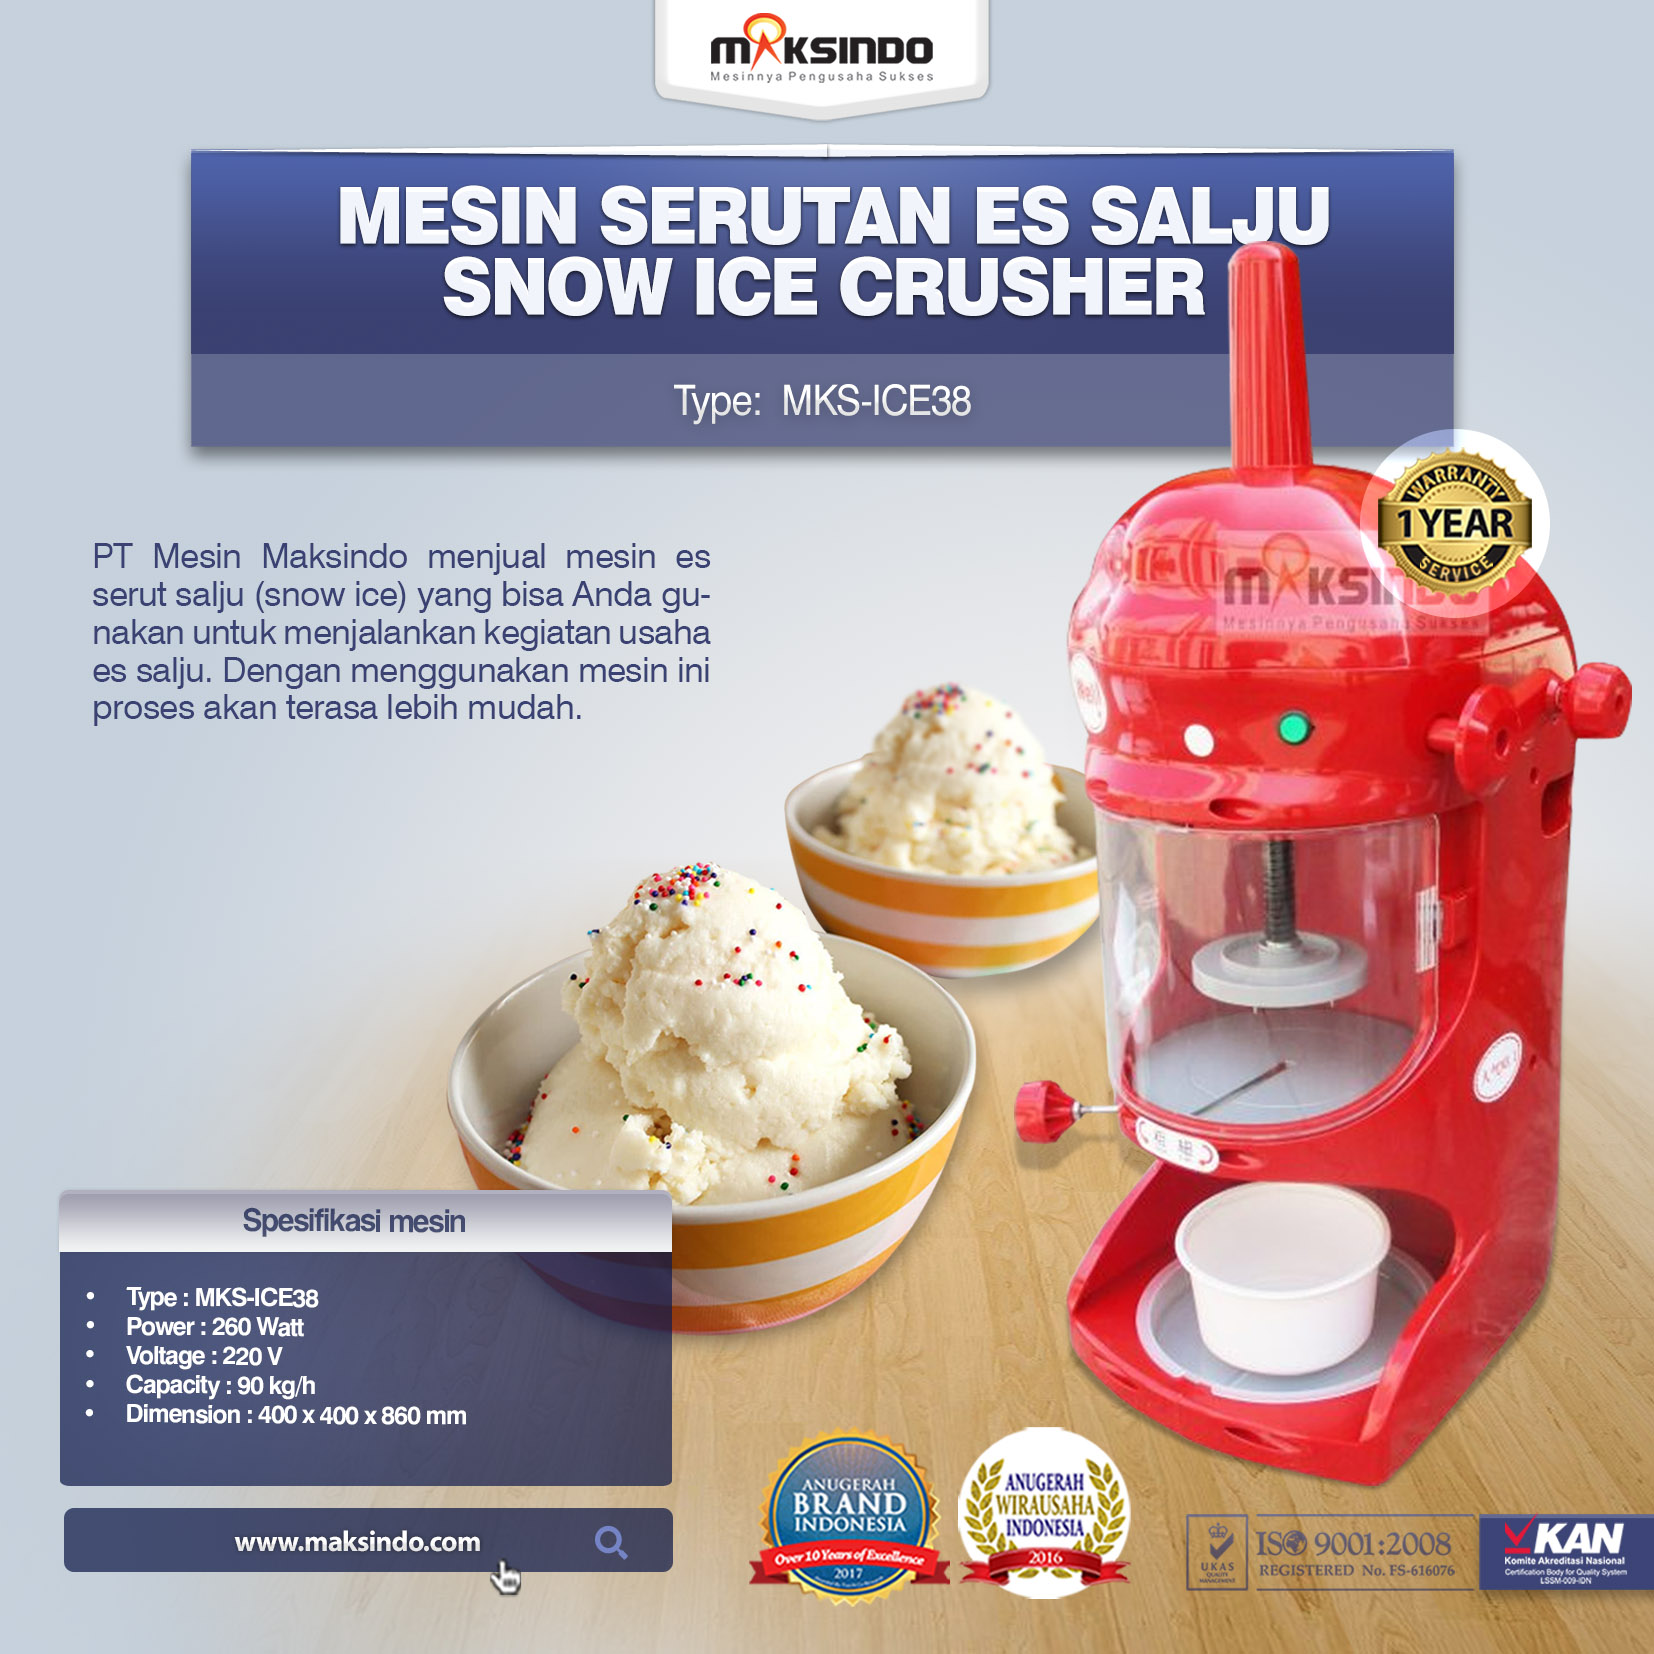 Mesin Serutan Es Salju Snow Ice Crusher MKS-ICE38